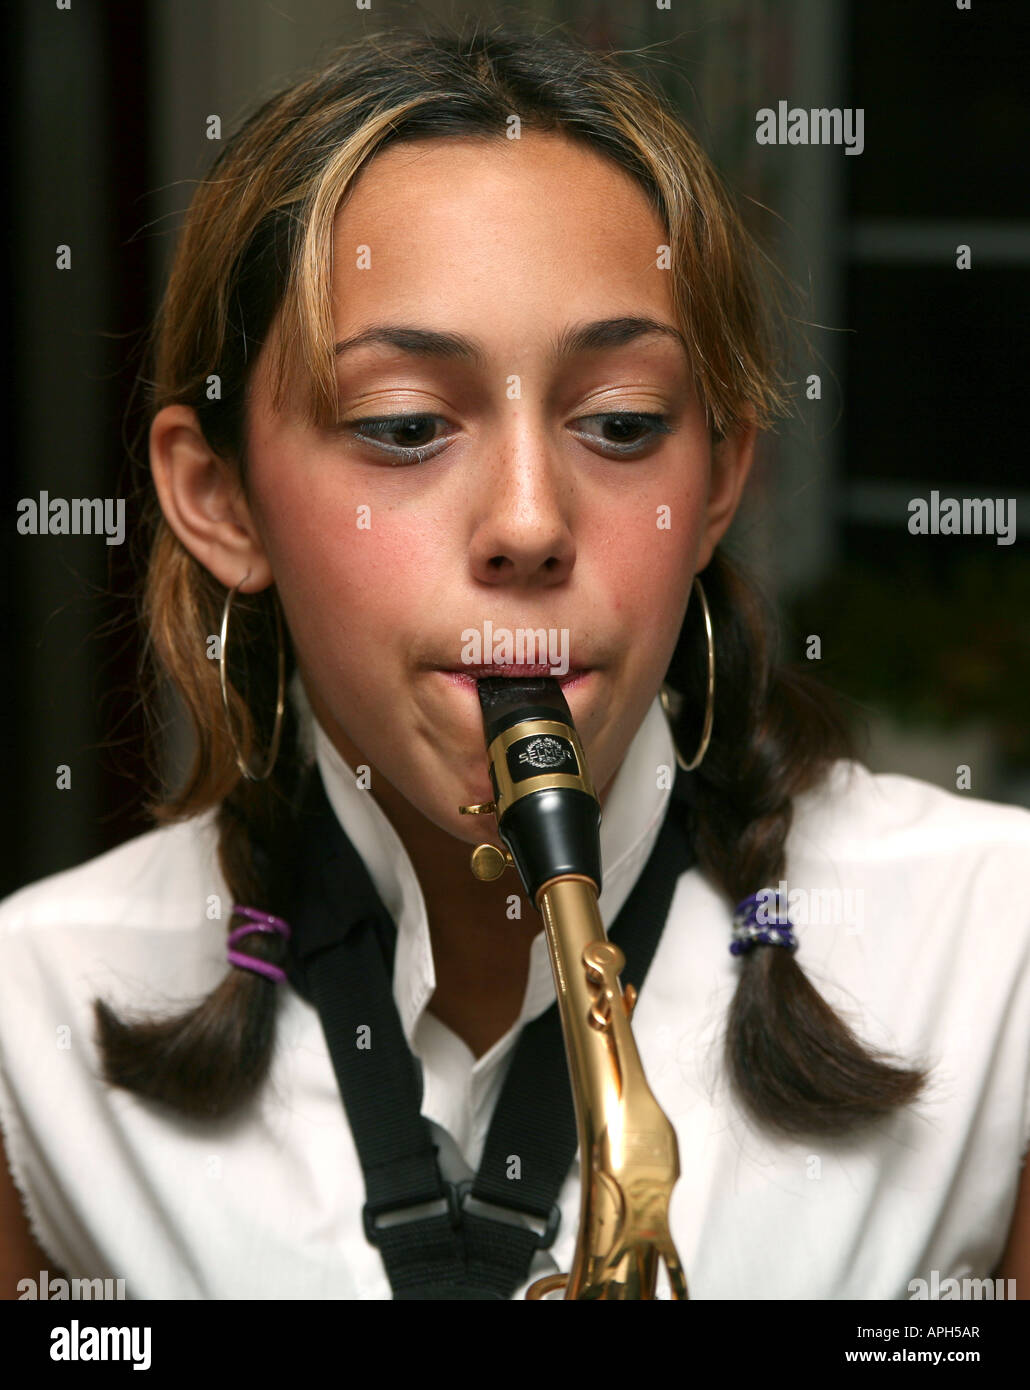 A teenage girl plays the saxophone Stock Photo